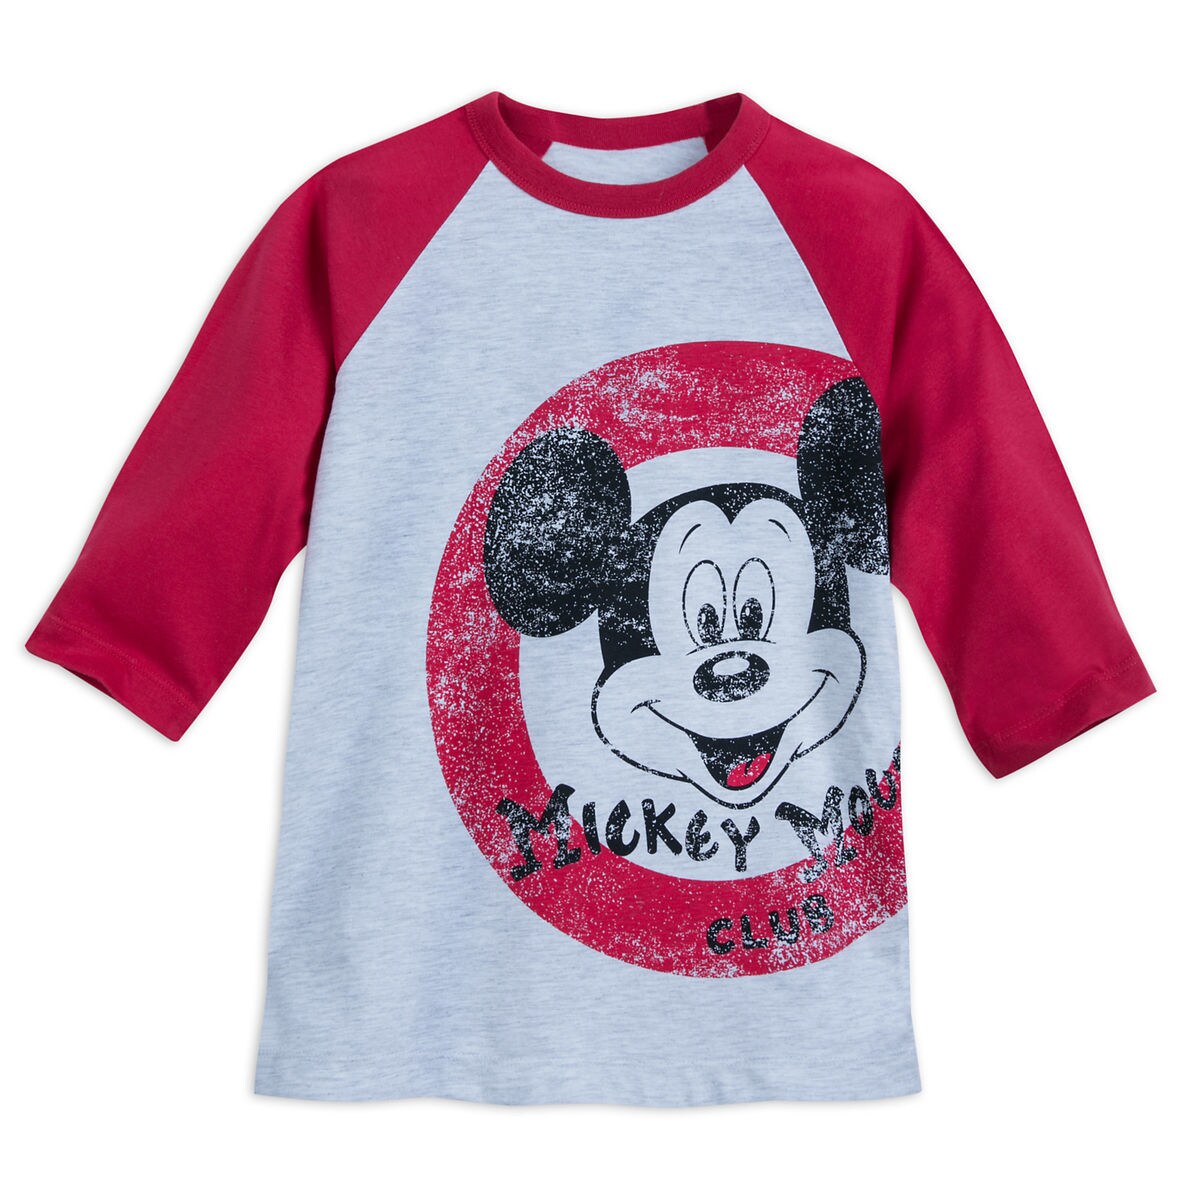 Product Image of Mickey Mouse Club Raglan Shirt for Kids # 1